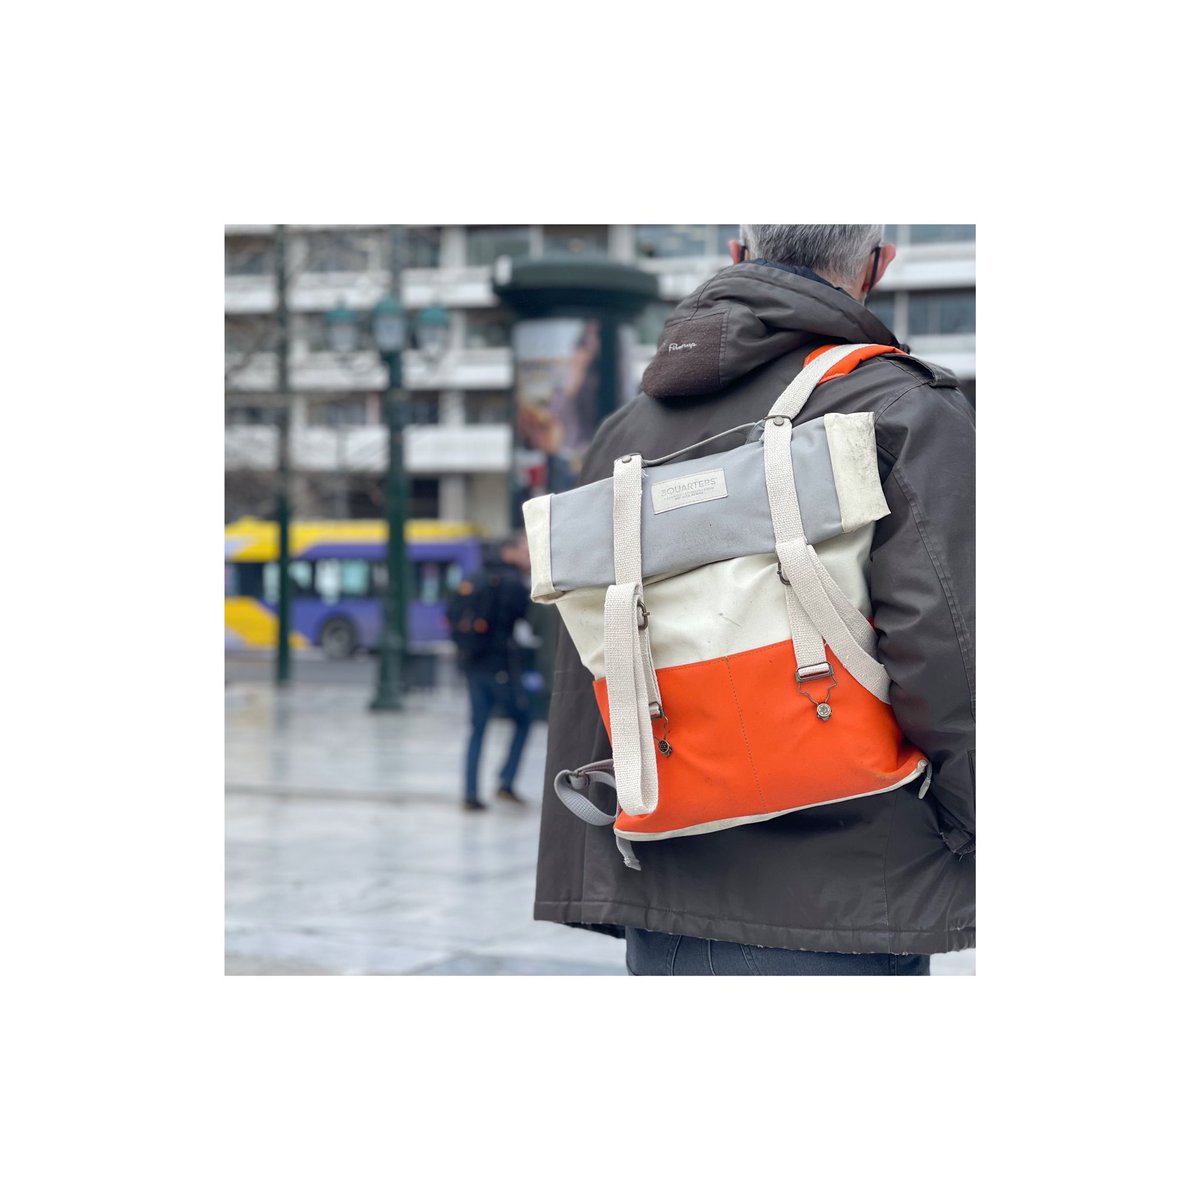 Winter essentials!☂️🧤

We carry our all day James backpack in any weather, it’s waterproof! 🌥️

#my3quarters #textilewaste #waterproofbag #circularfashion #veganbackpack #zerowaste #barbara